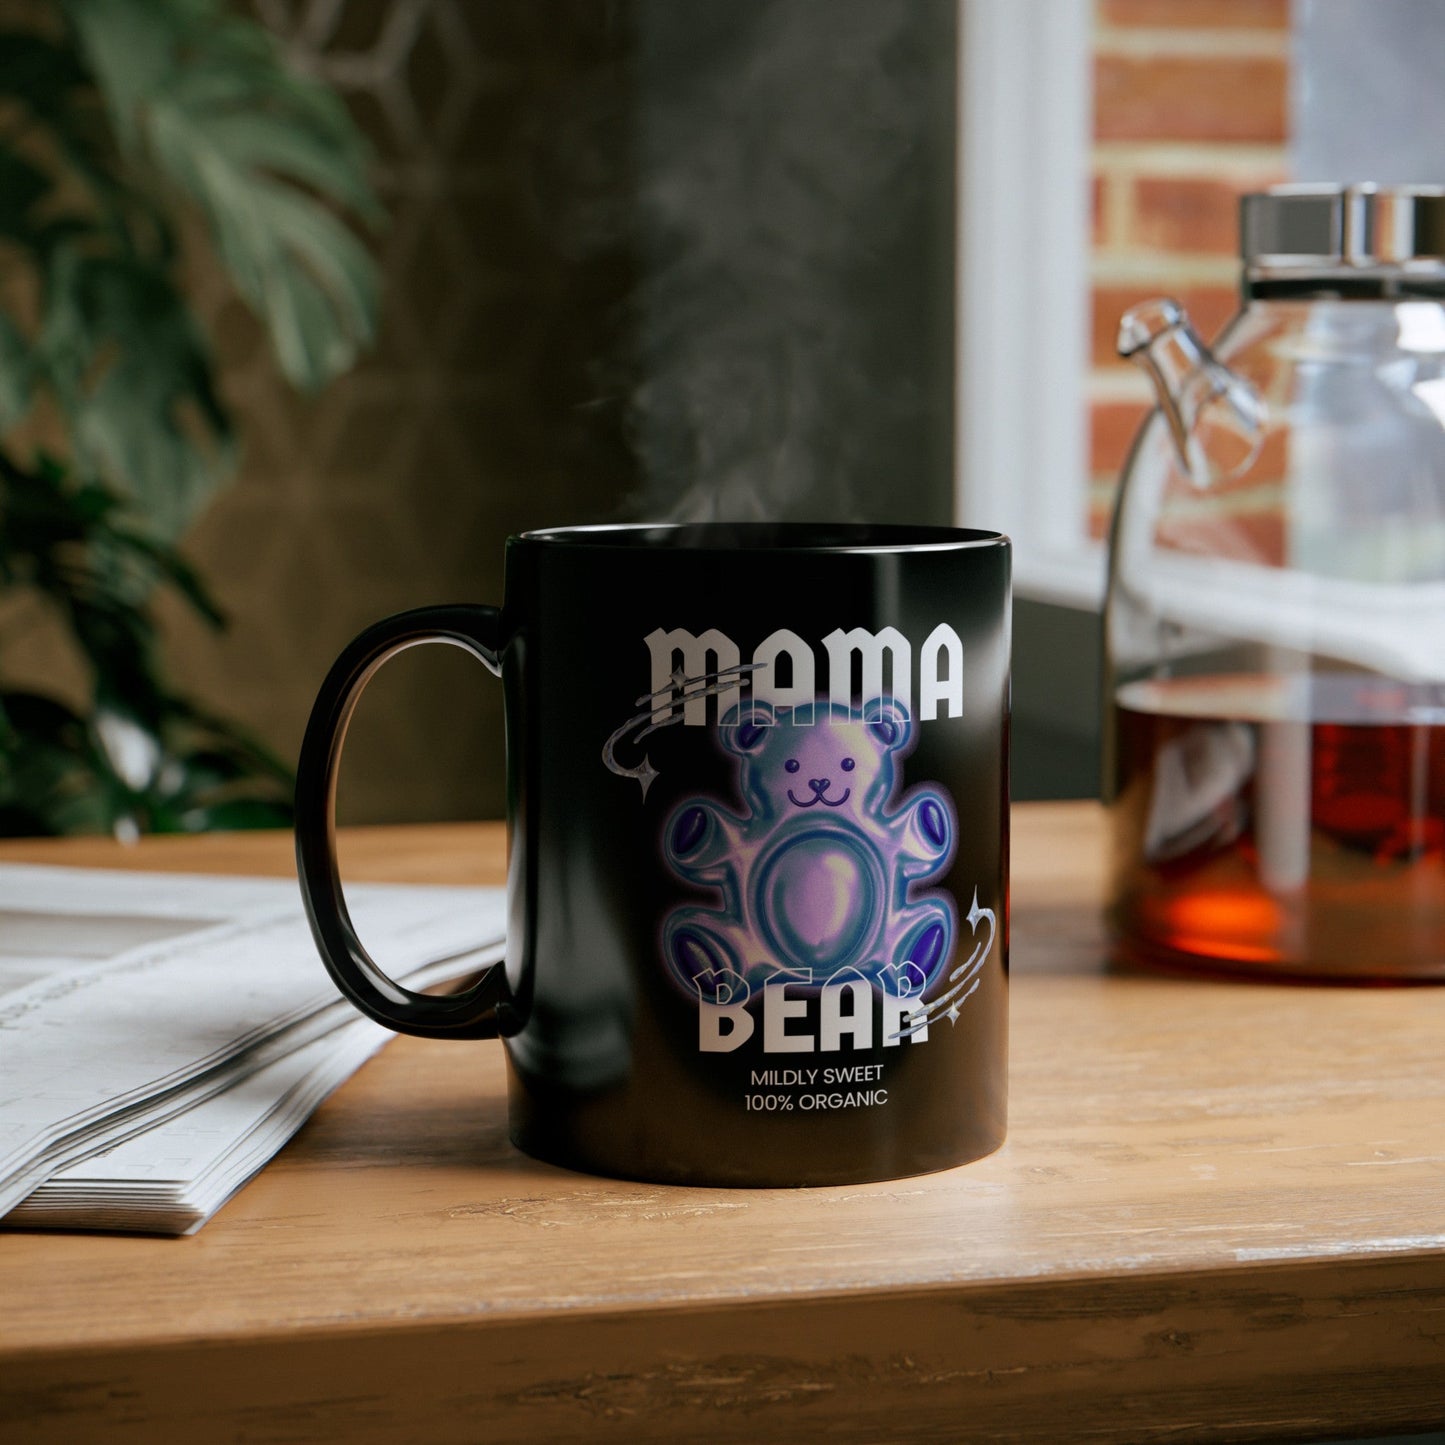 Mama Bear Mildly Sweet 100% Organic Gummy Bear 11oz Black Mug | Mothers Day Coffee Lovers Gift